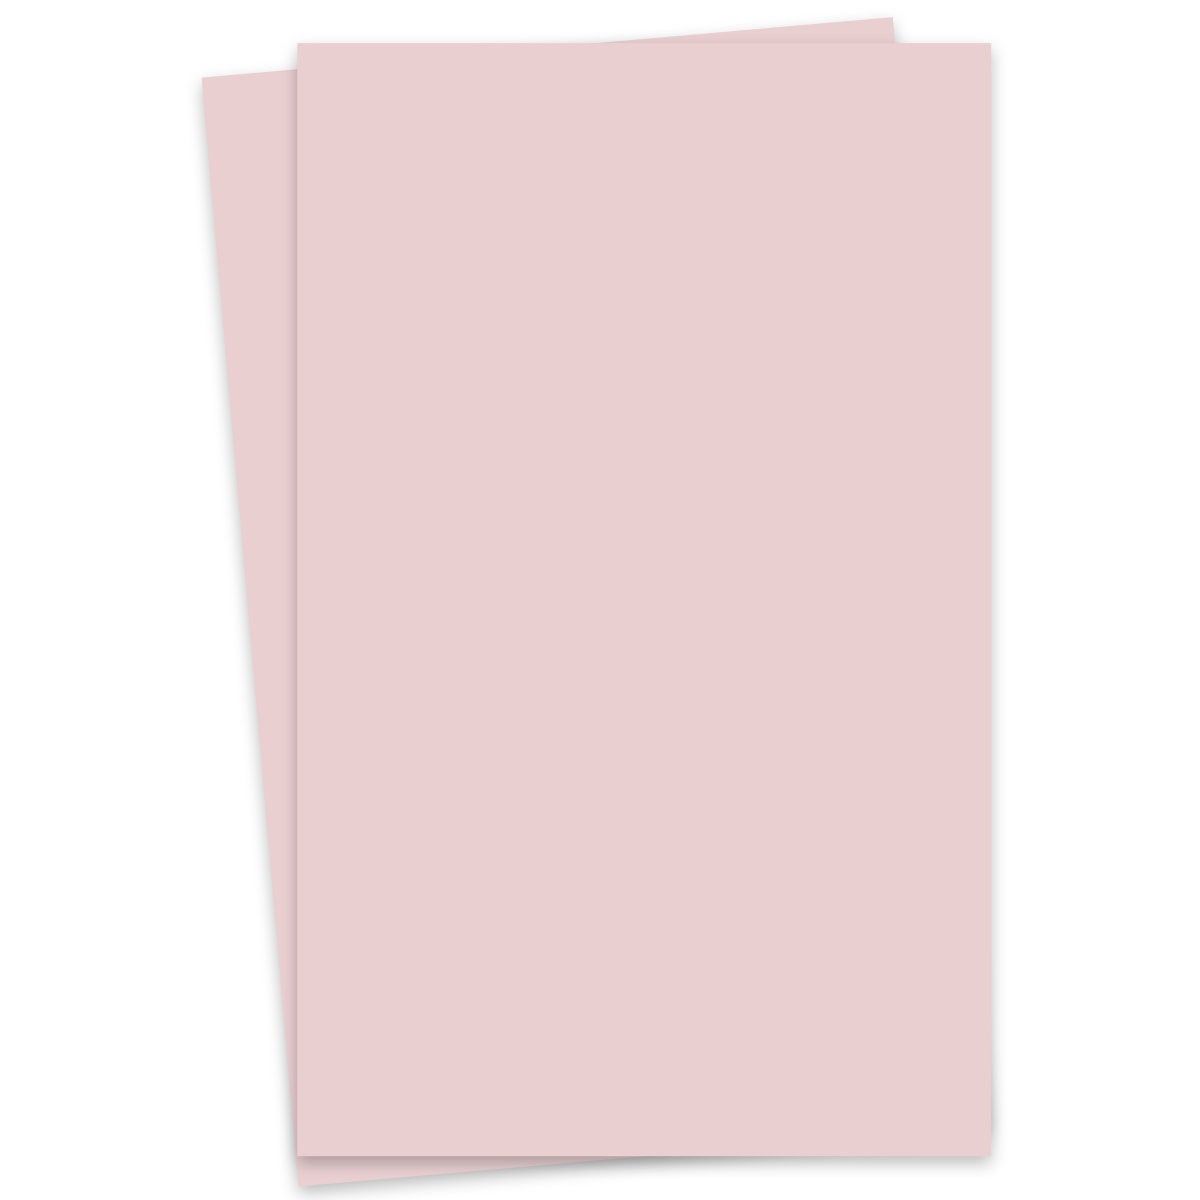 Burano SKY BLUE (08) - 8.5x11 Lightweight Cardstock Paper - 52lb Cover (140